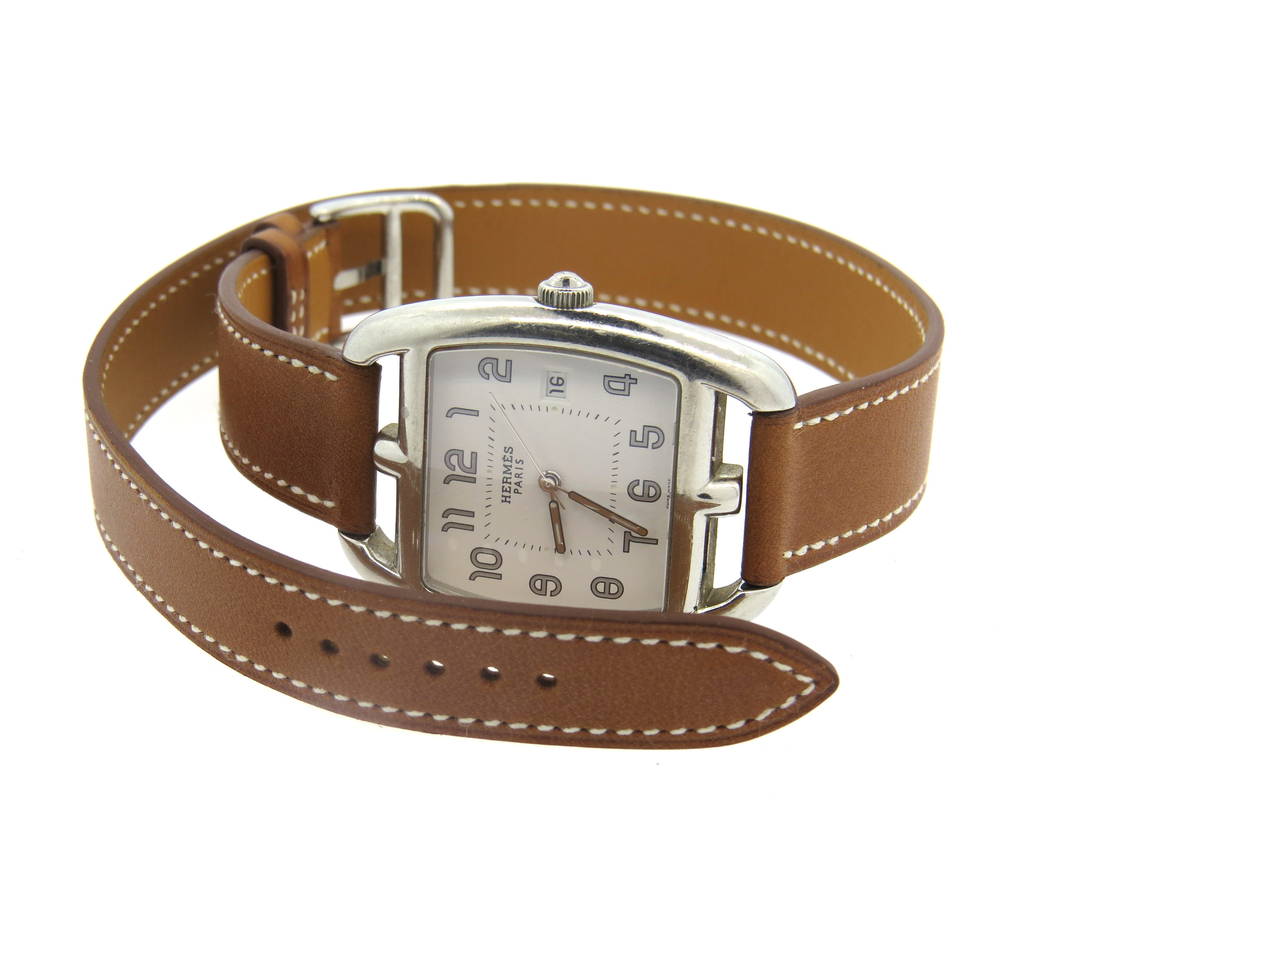 Hermes Stainless Steel Cape Cod Tonneau Wrap Bracelet Watch Ref CT1.710 2